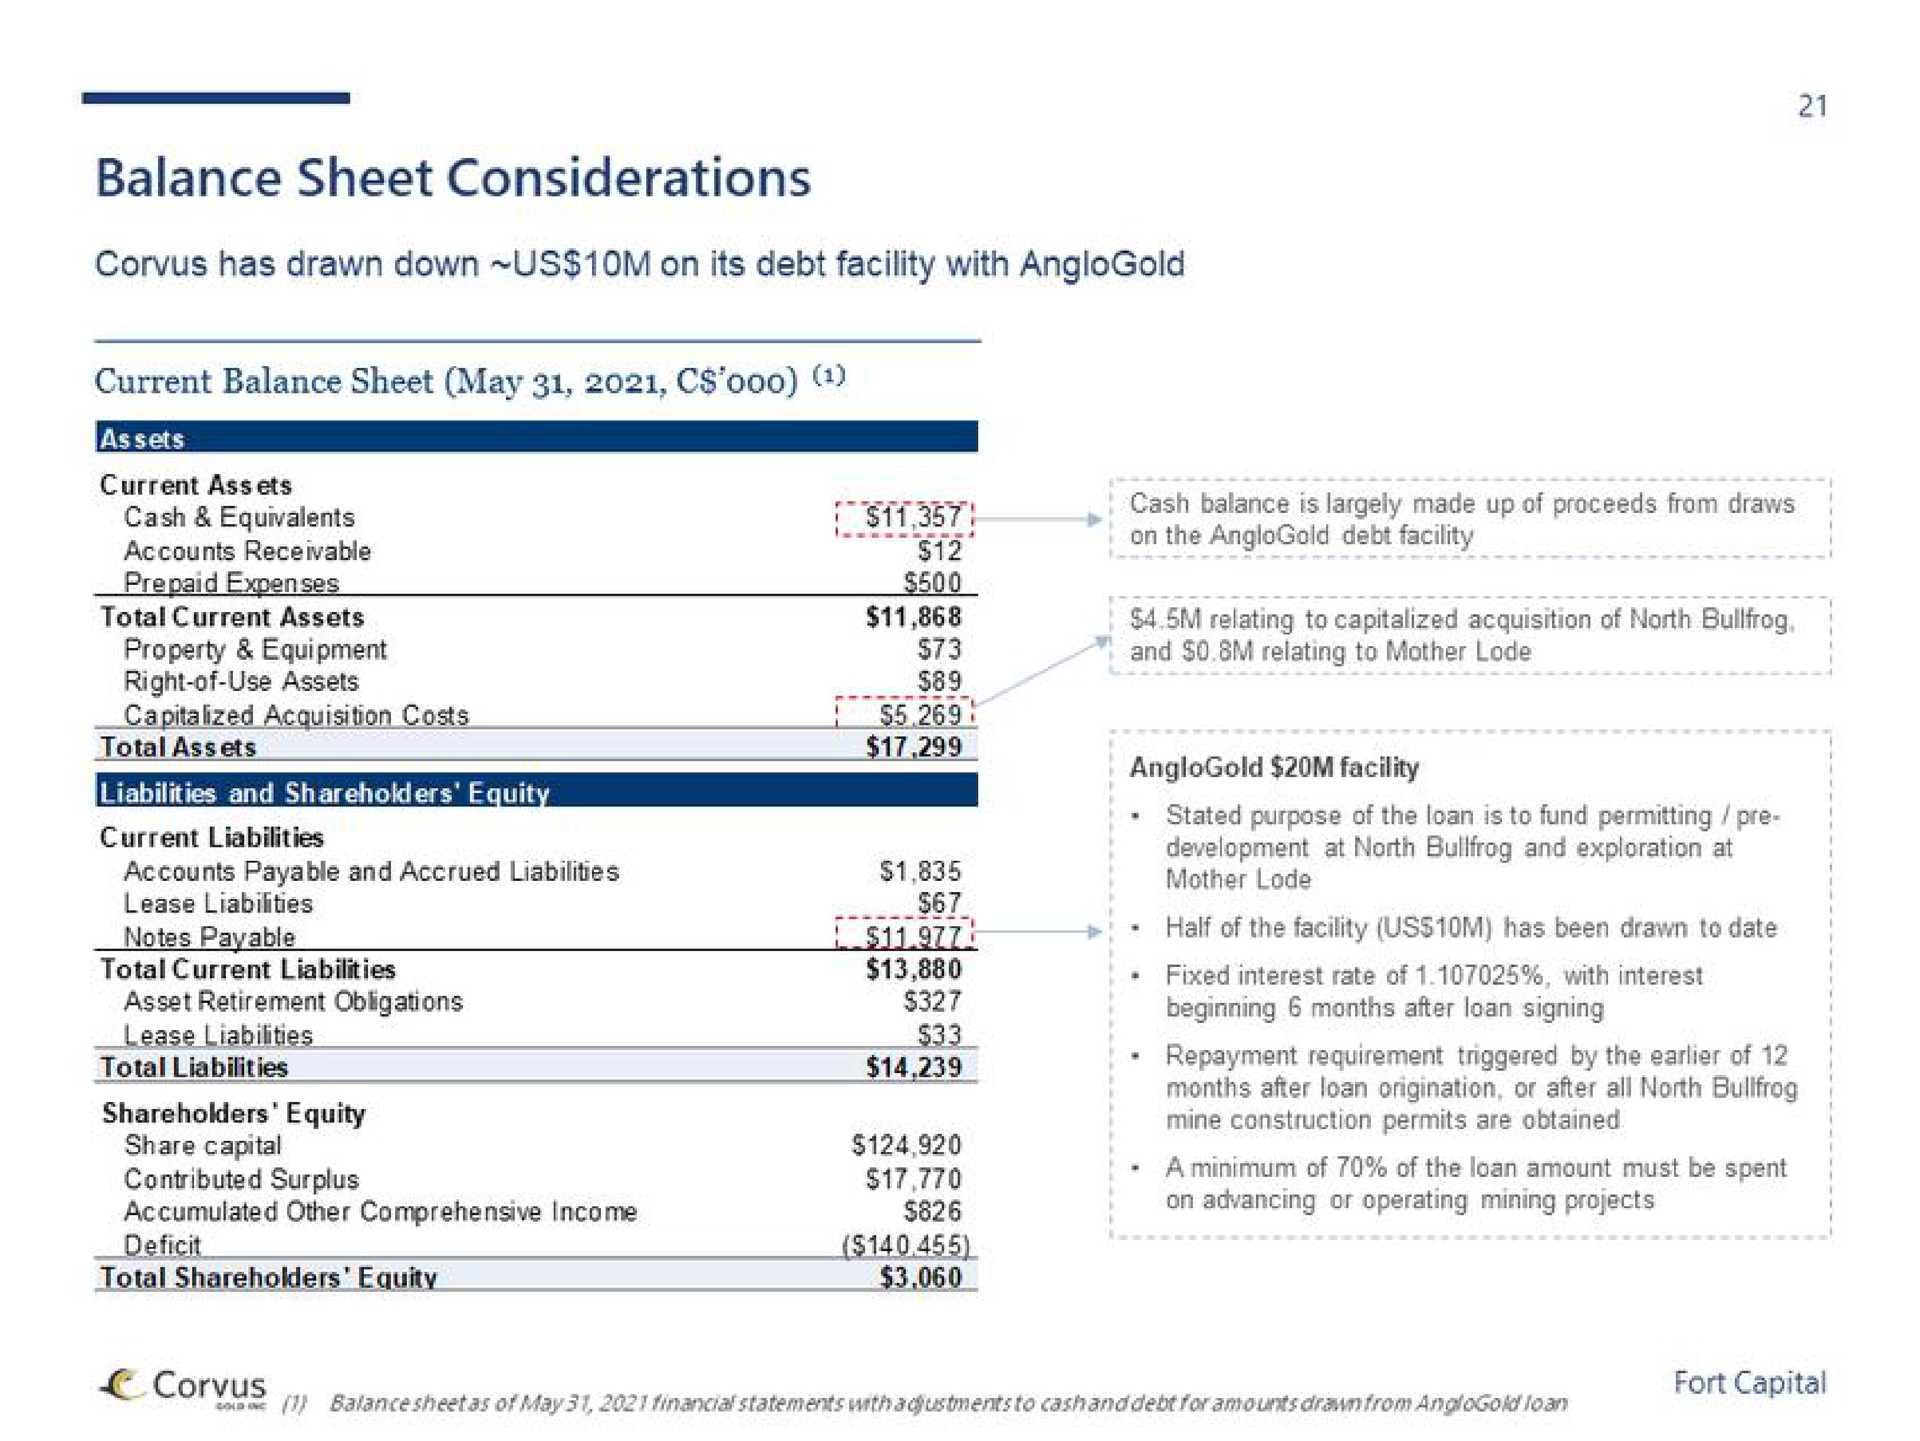 balance sheet considerations | Fort Capital